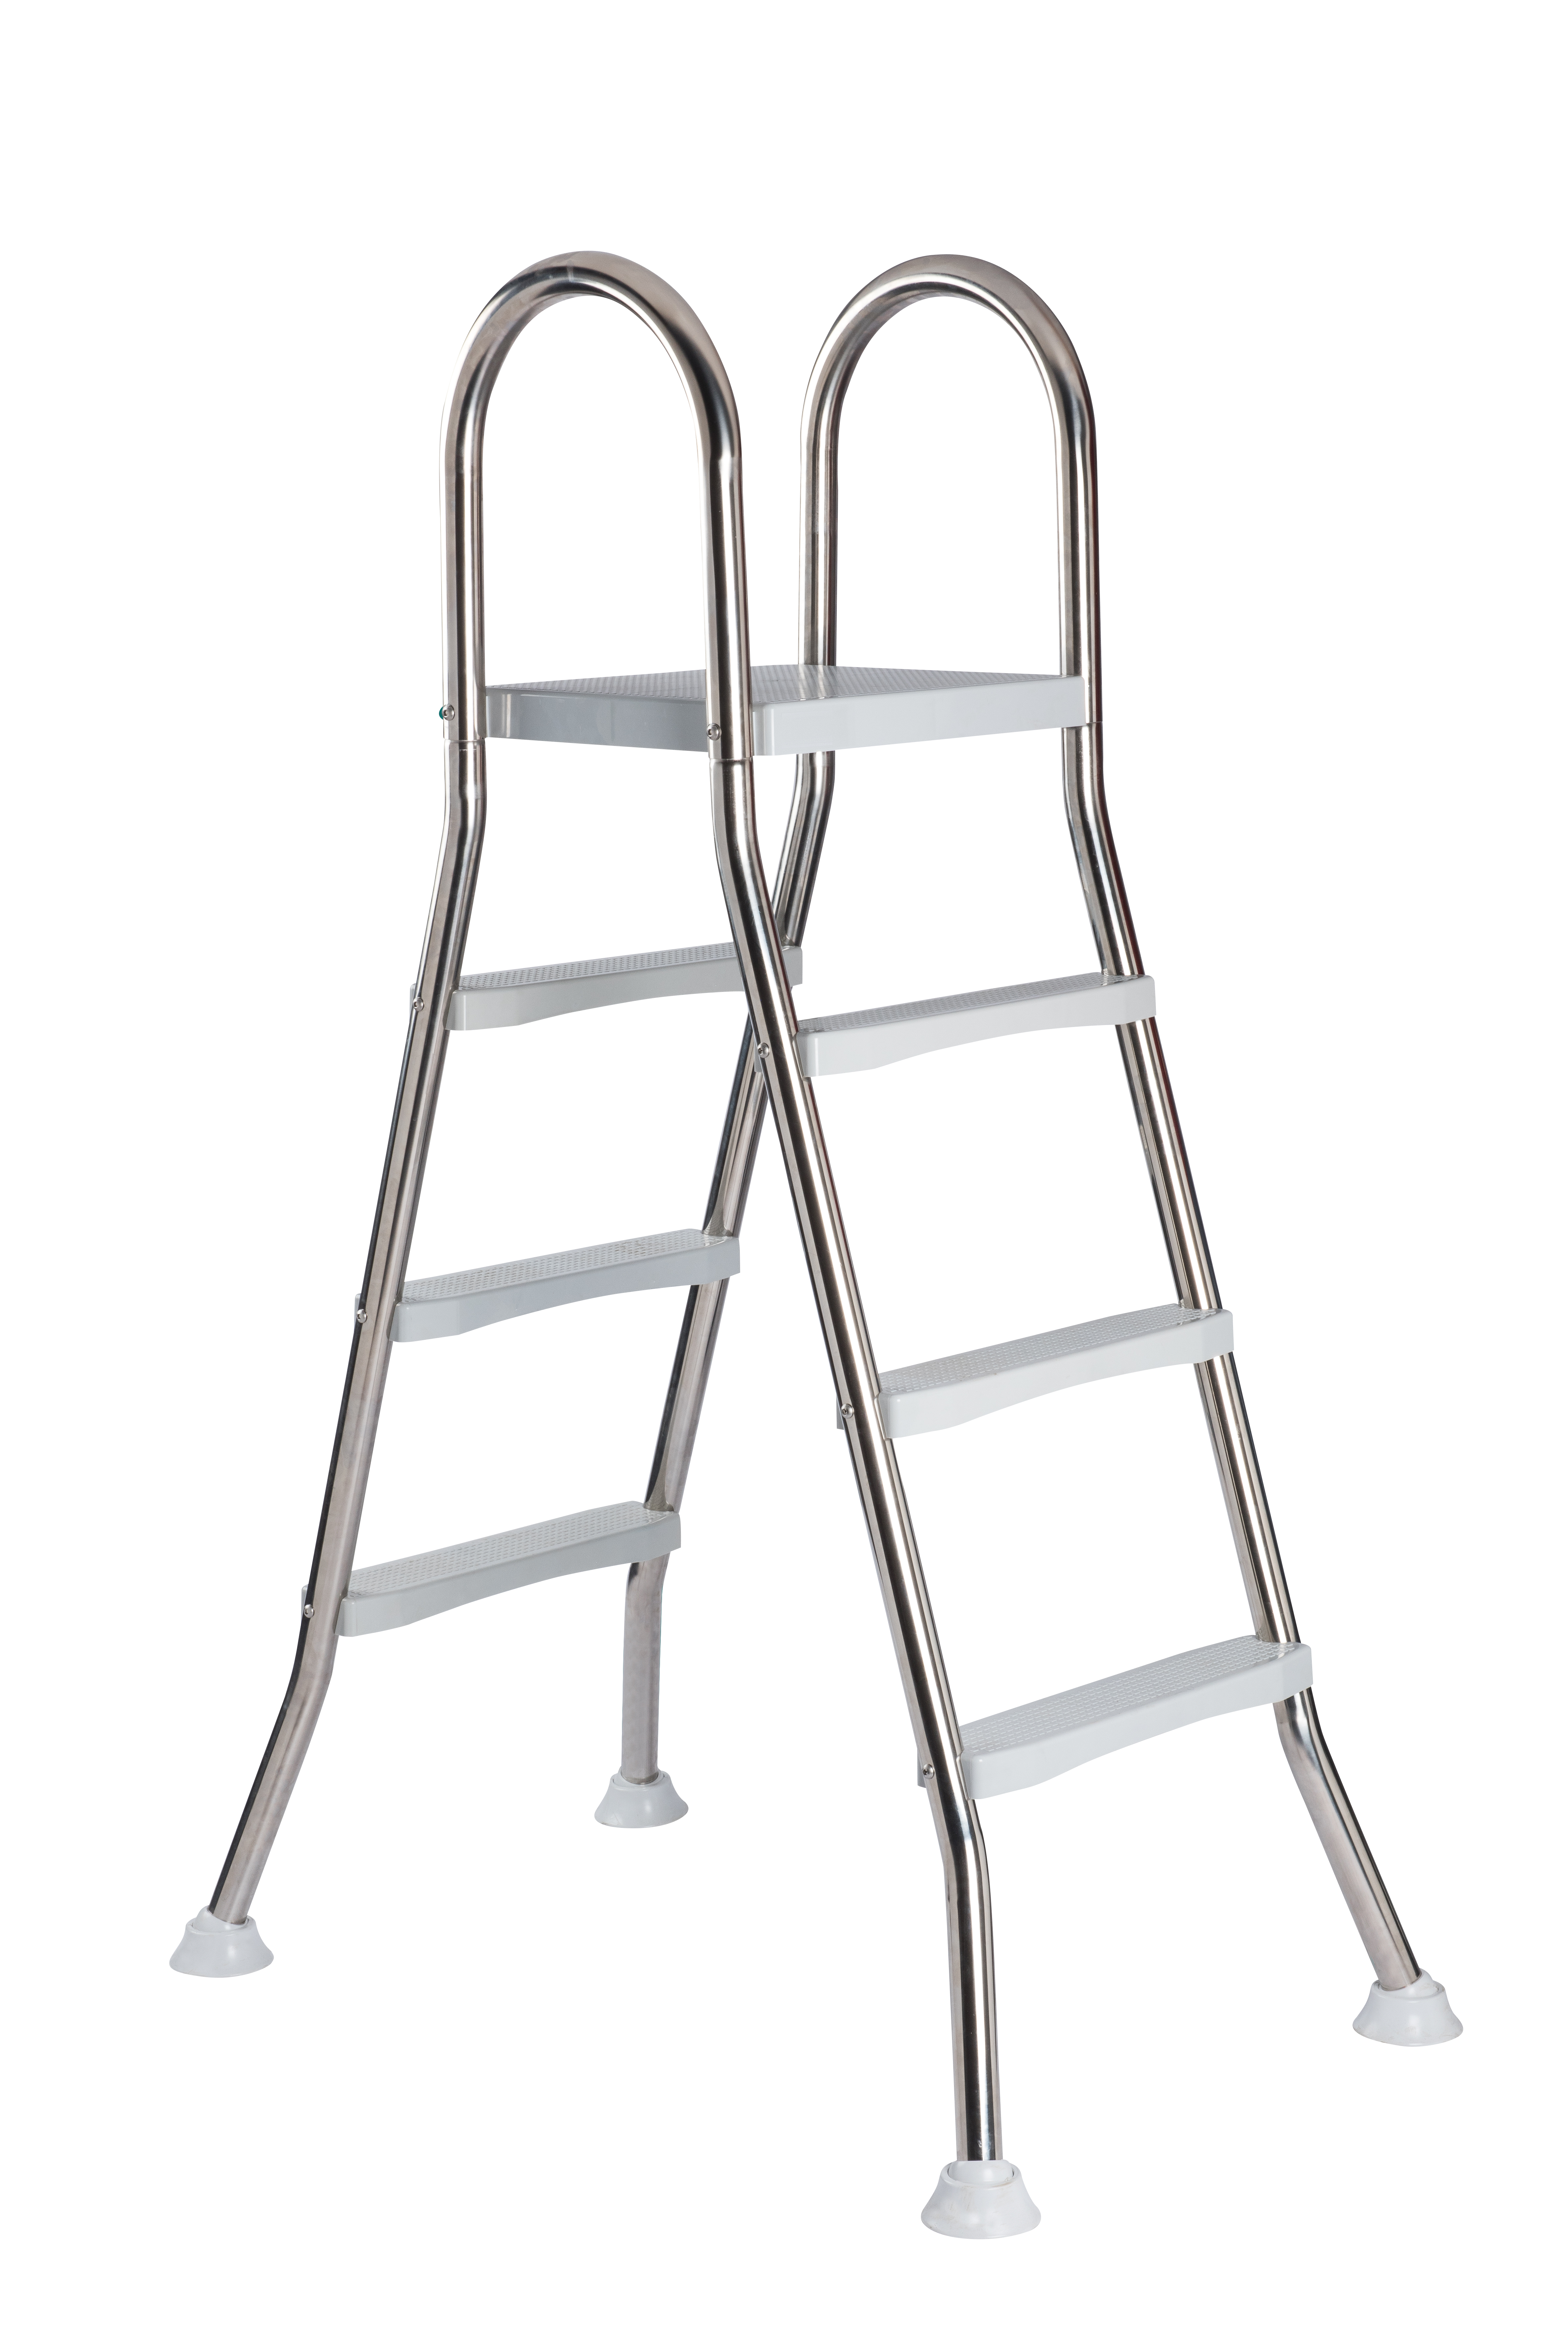 & Poolleiter, Ladder FUN SWIM Grau w/Platform 3-Steps